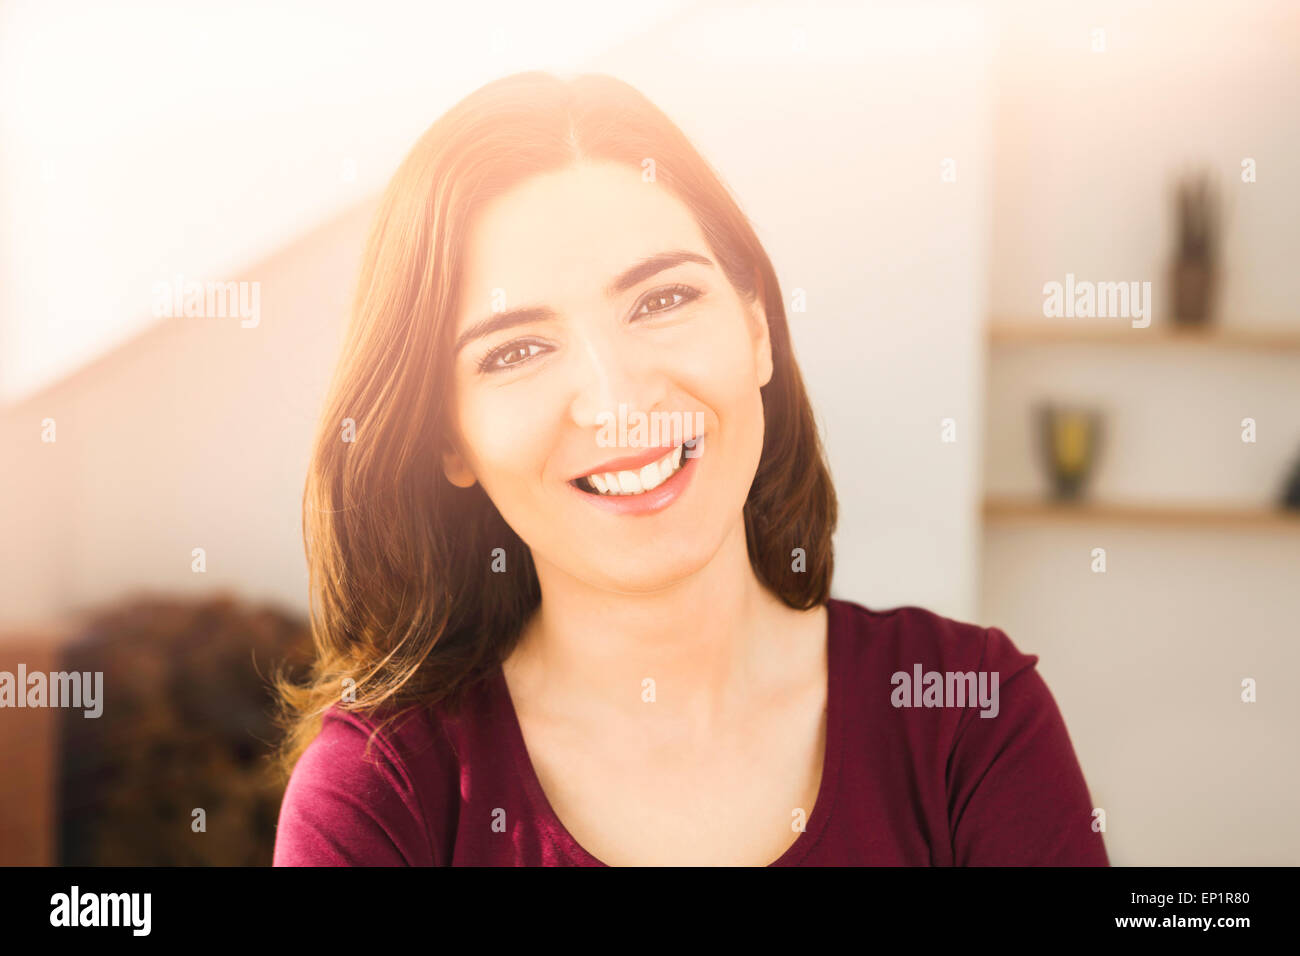 Porttrait of a beautiful woman smiling Stock Photo